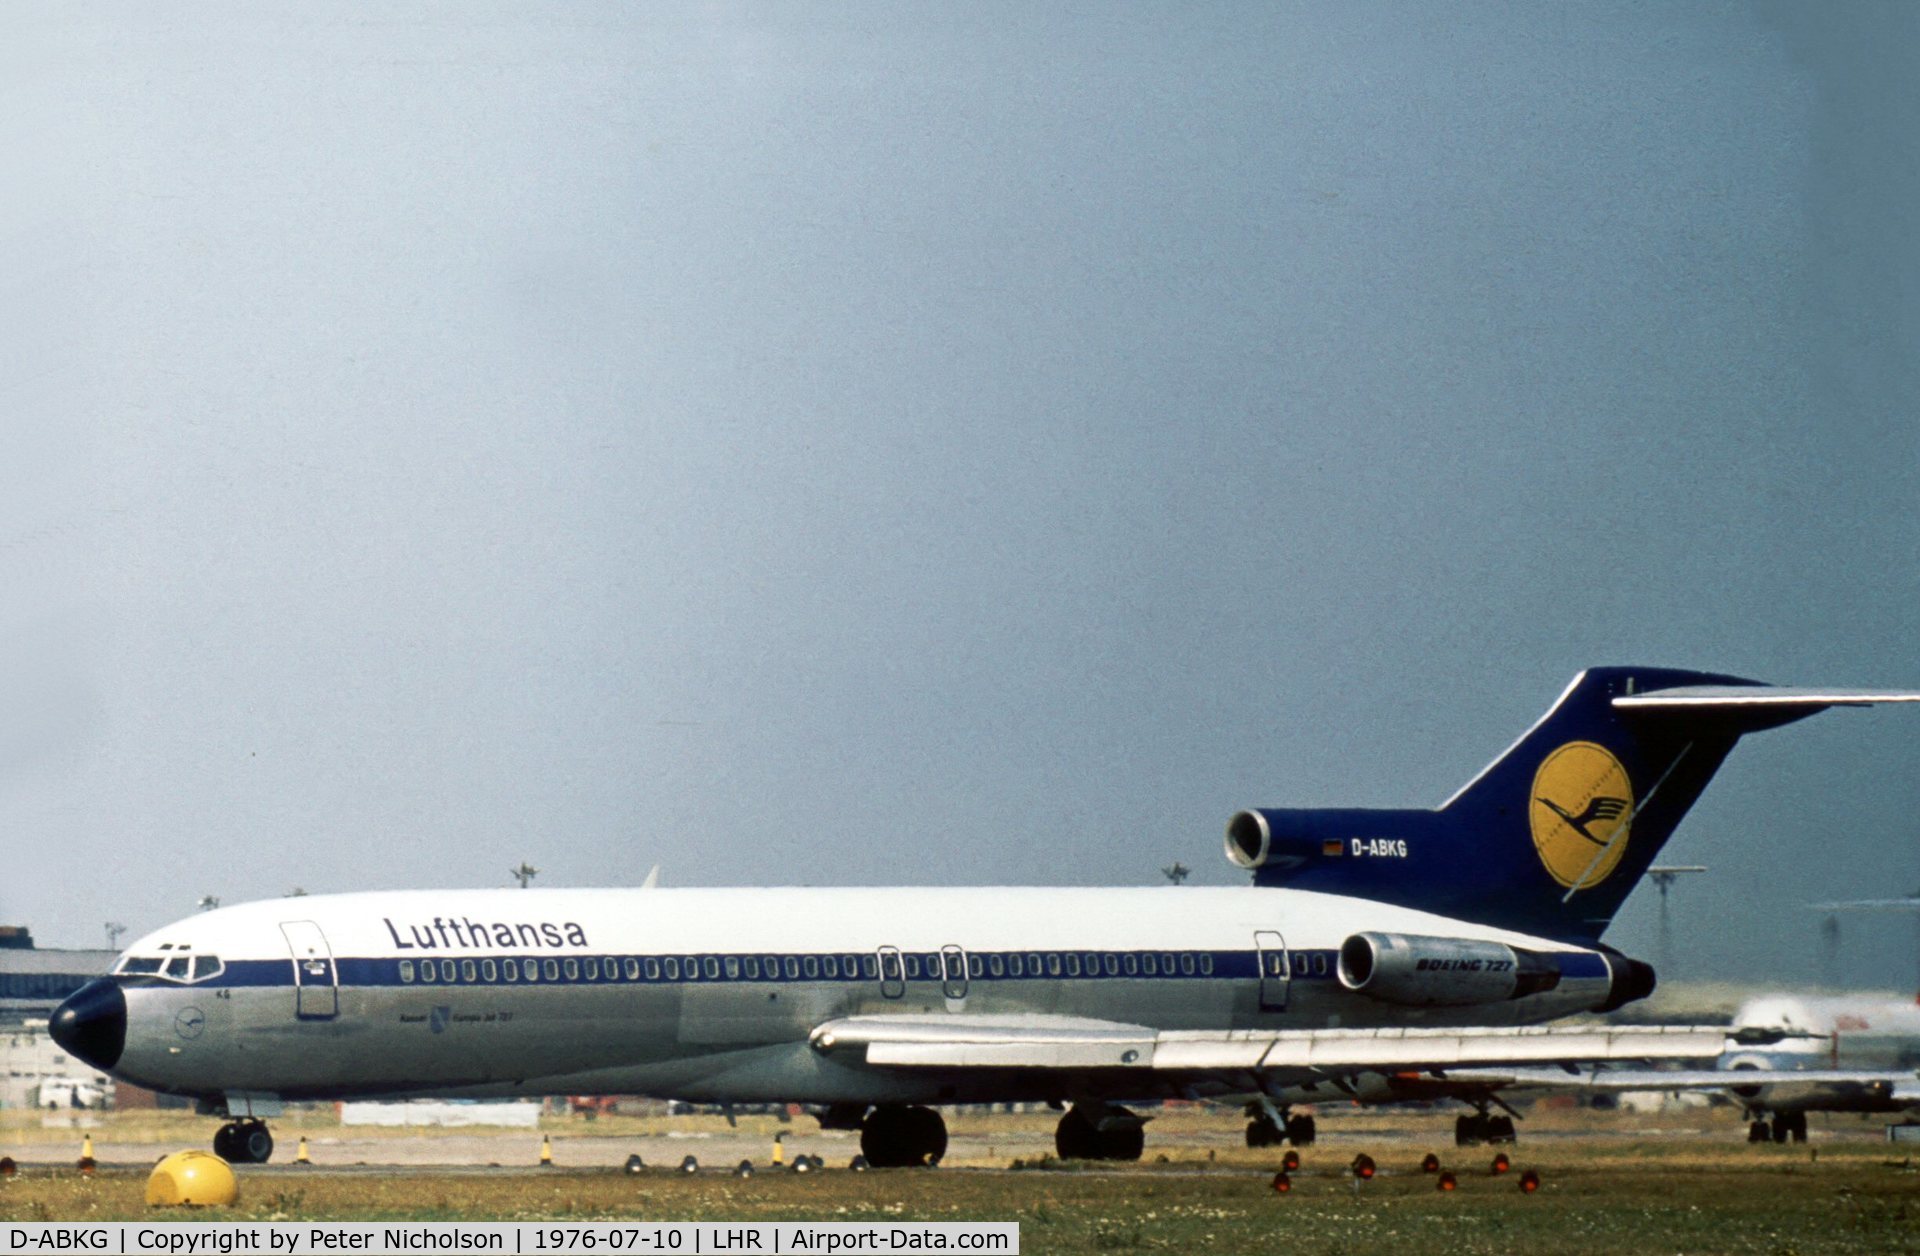 D-ABKG, 1975 Boeing 727-230 C/N 20905, Lufthansa flew this 727 named 